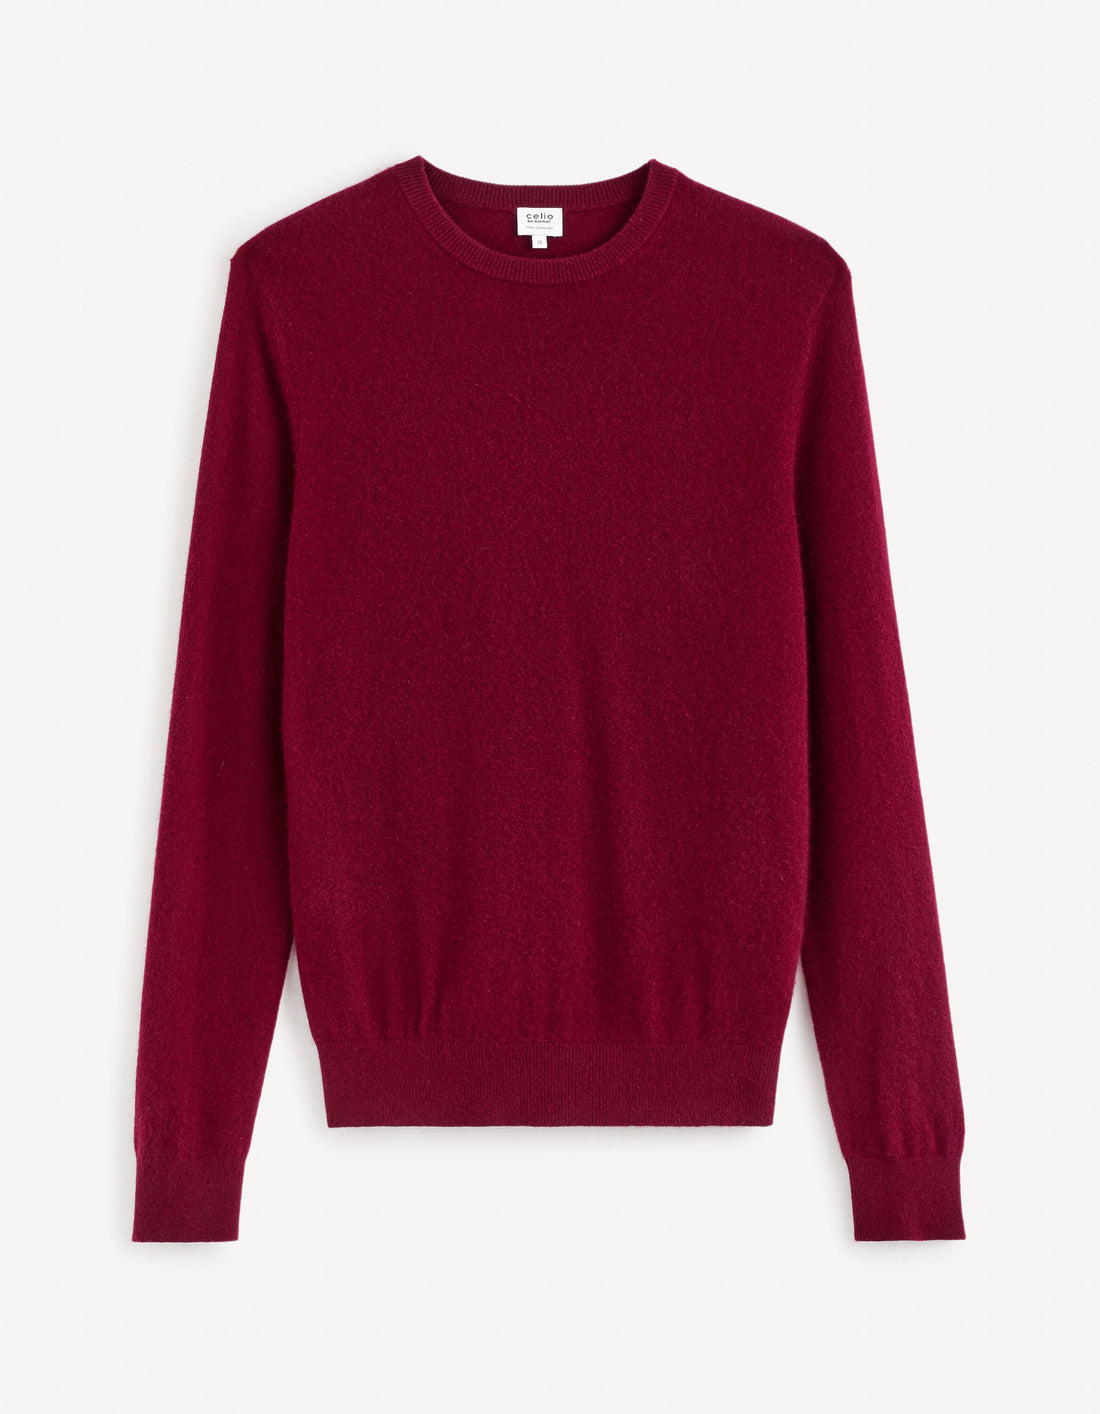 Round Neck Sweater 100% Cashmere_JECLOUD_BURGUNDY_01